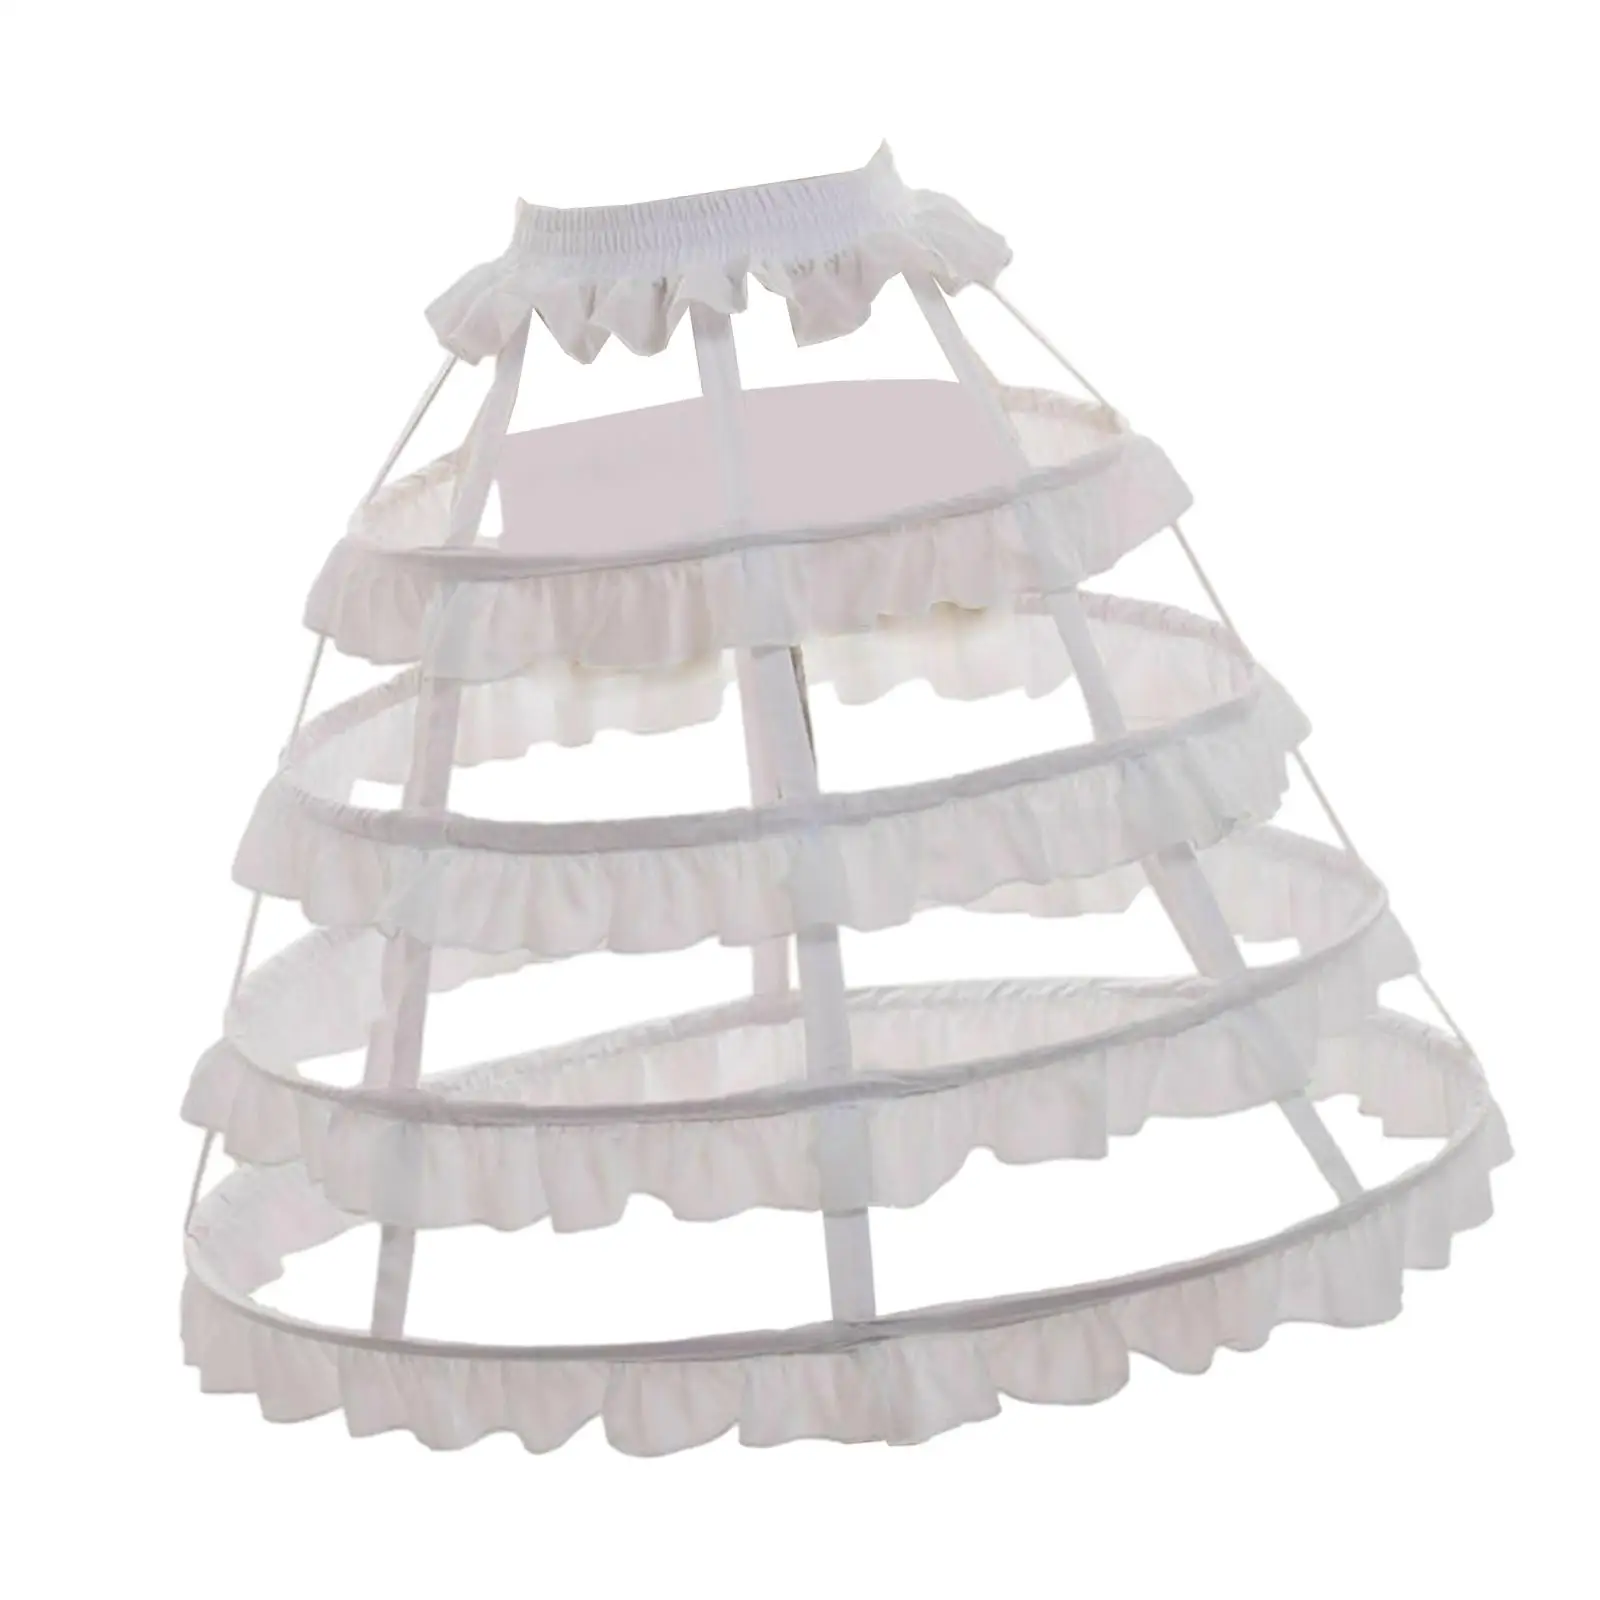 Hoop Skirt Petticoat Crinoline Underskirt Pannier Girls Hoops Pannier Petticoat Cage Pannier for Prom Gown Cosplay Dress Wedding